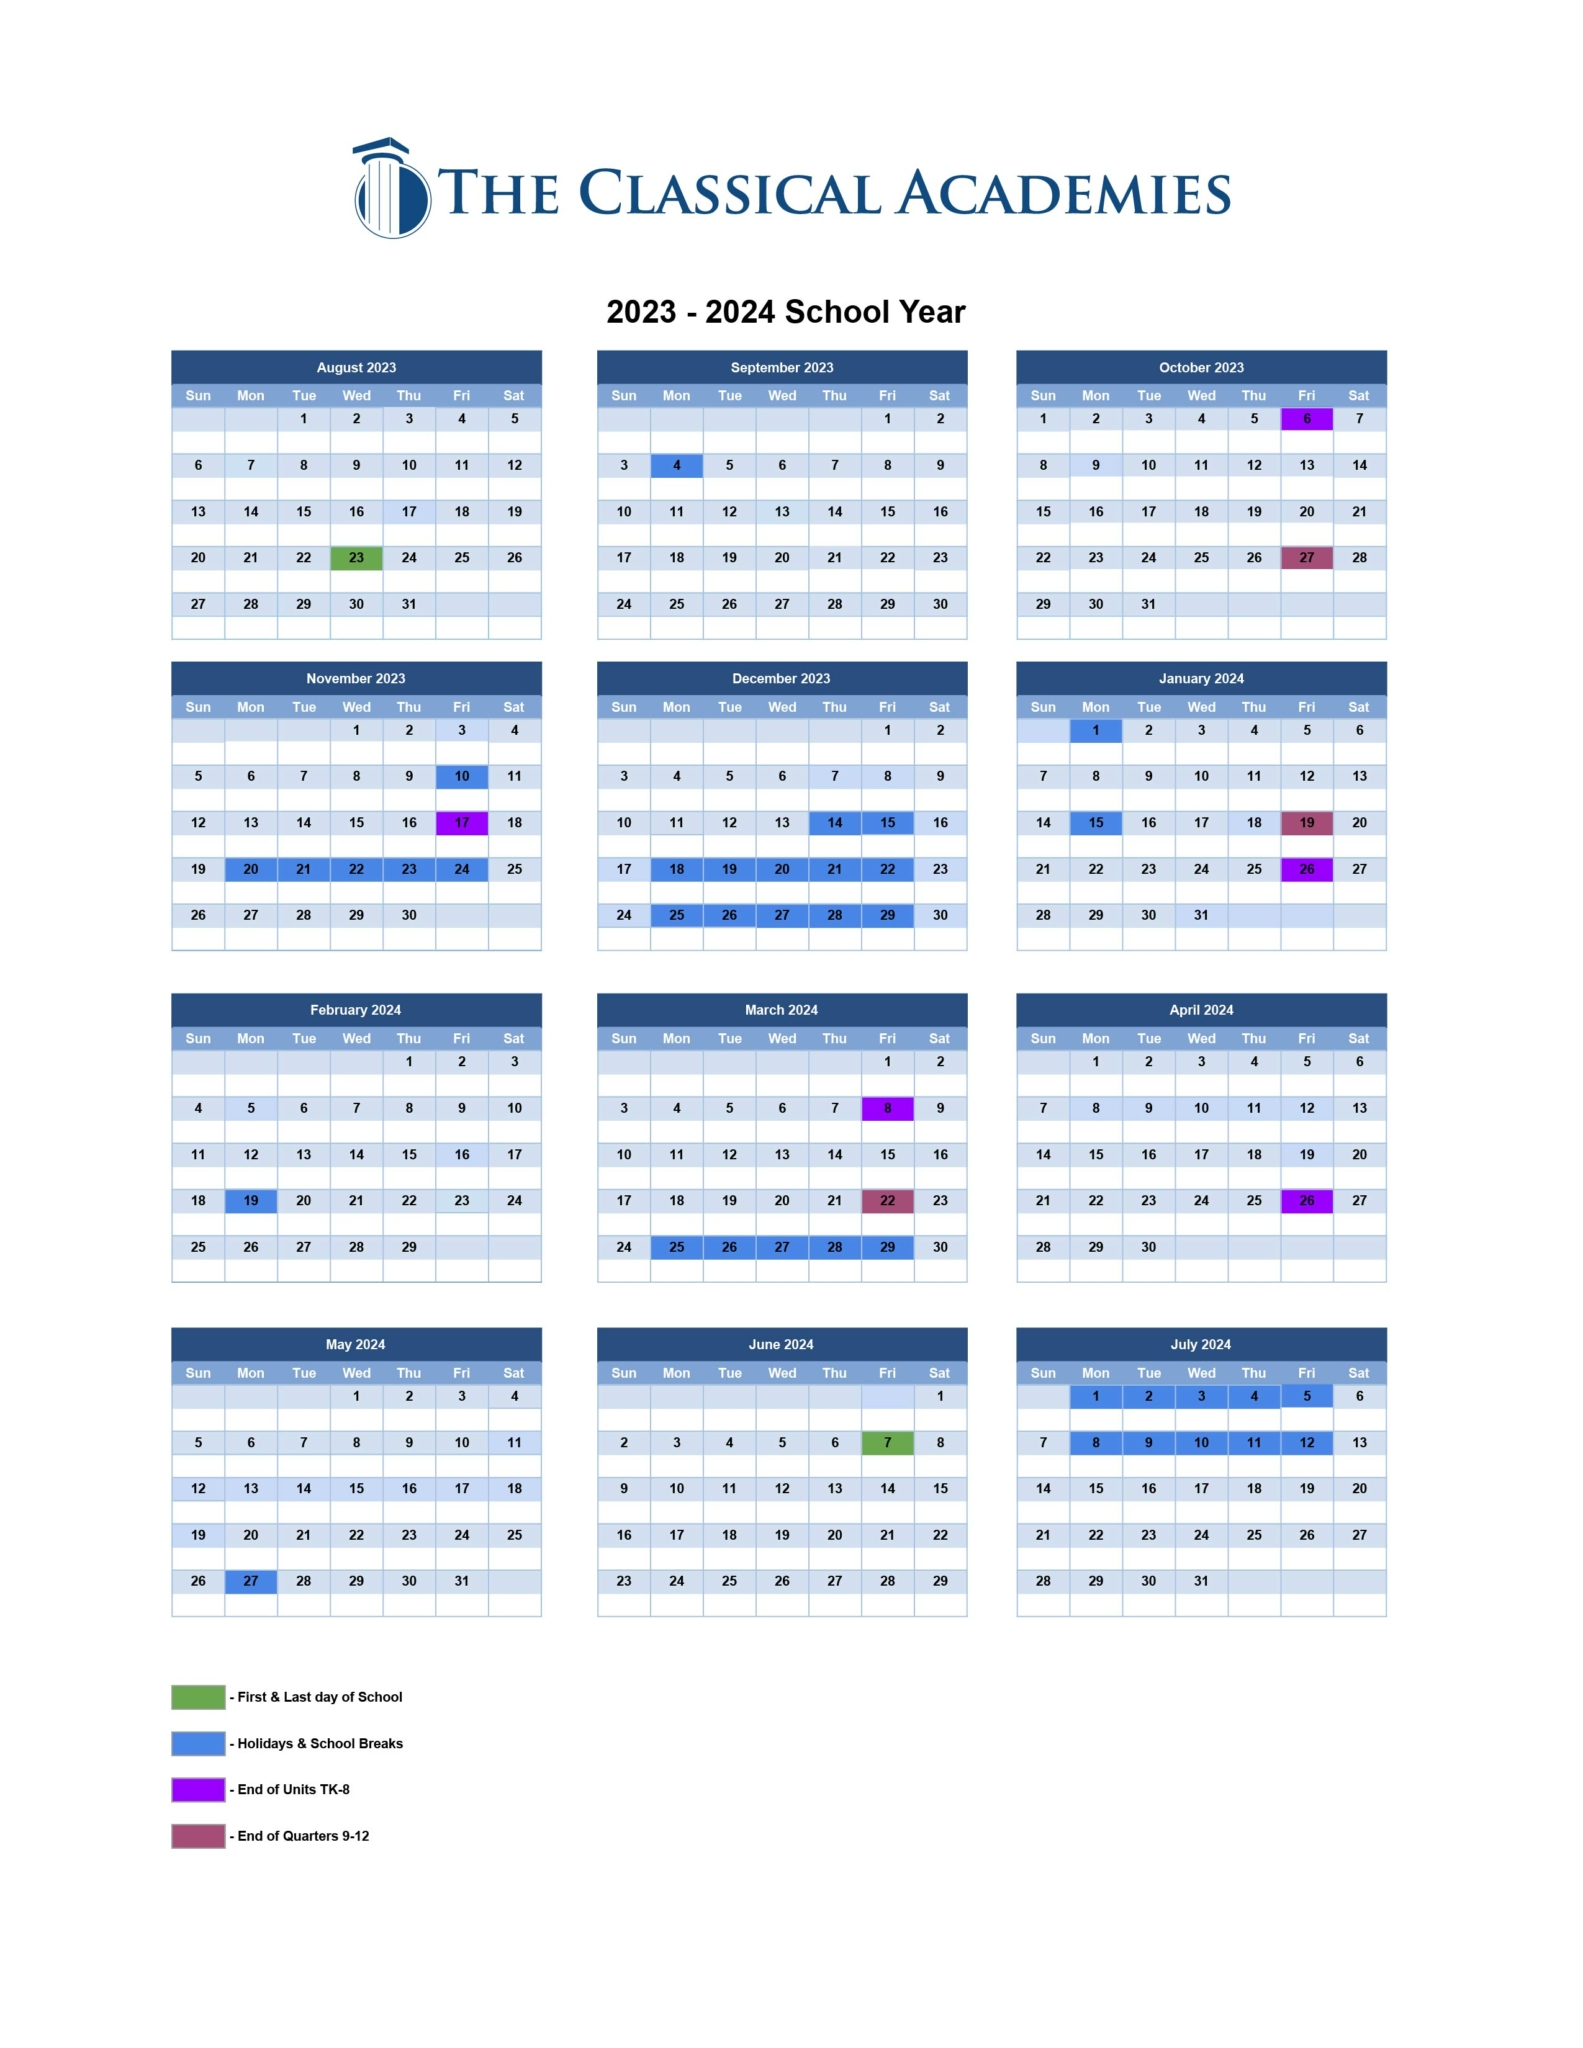 Instructional Calendar The Classical Academies 